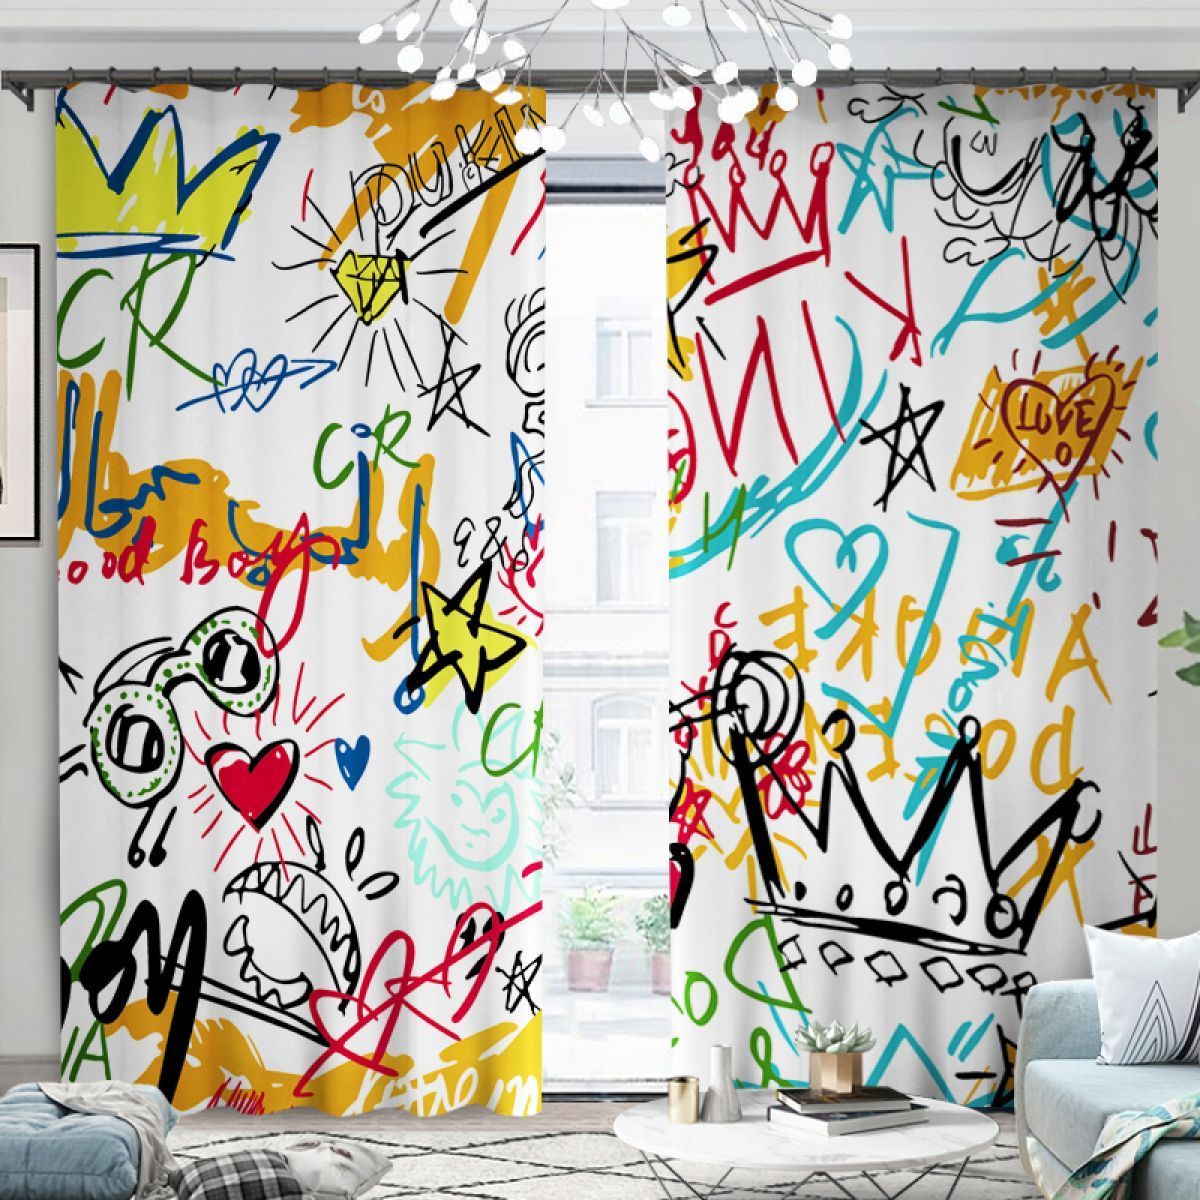 3d Graffiti Pop Art Printed Window Curtain Home Decor